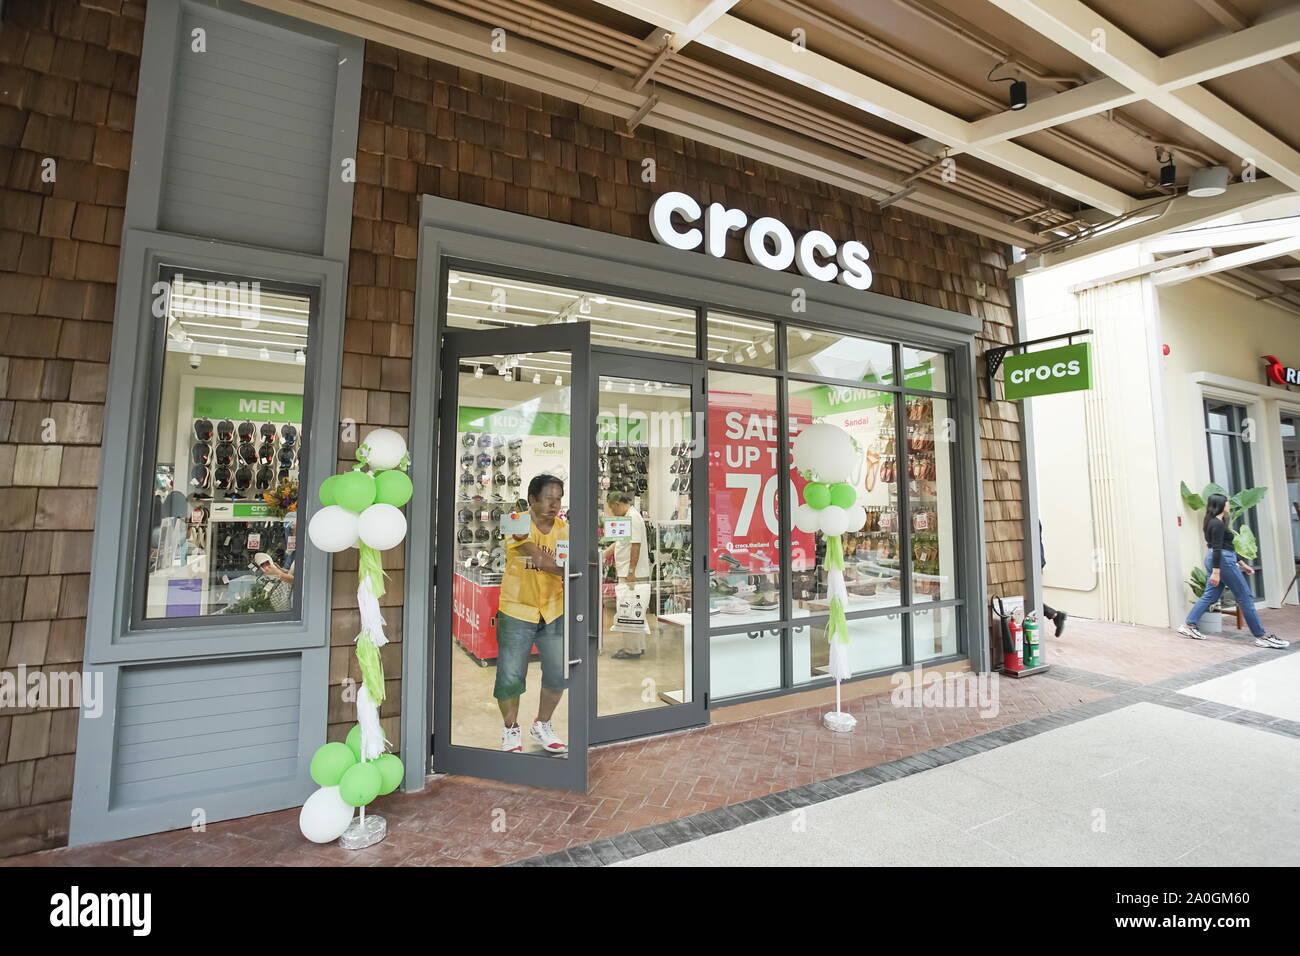 Crocs Shop High Resolution Stock 